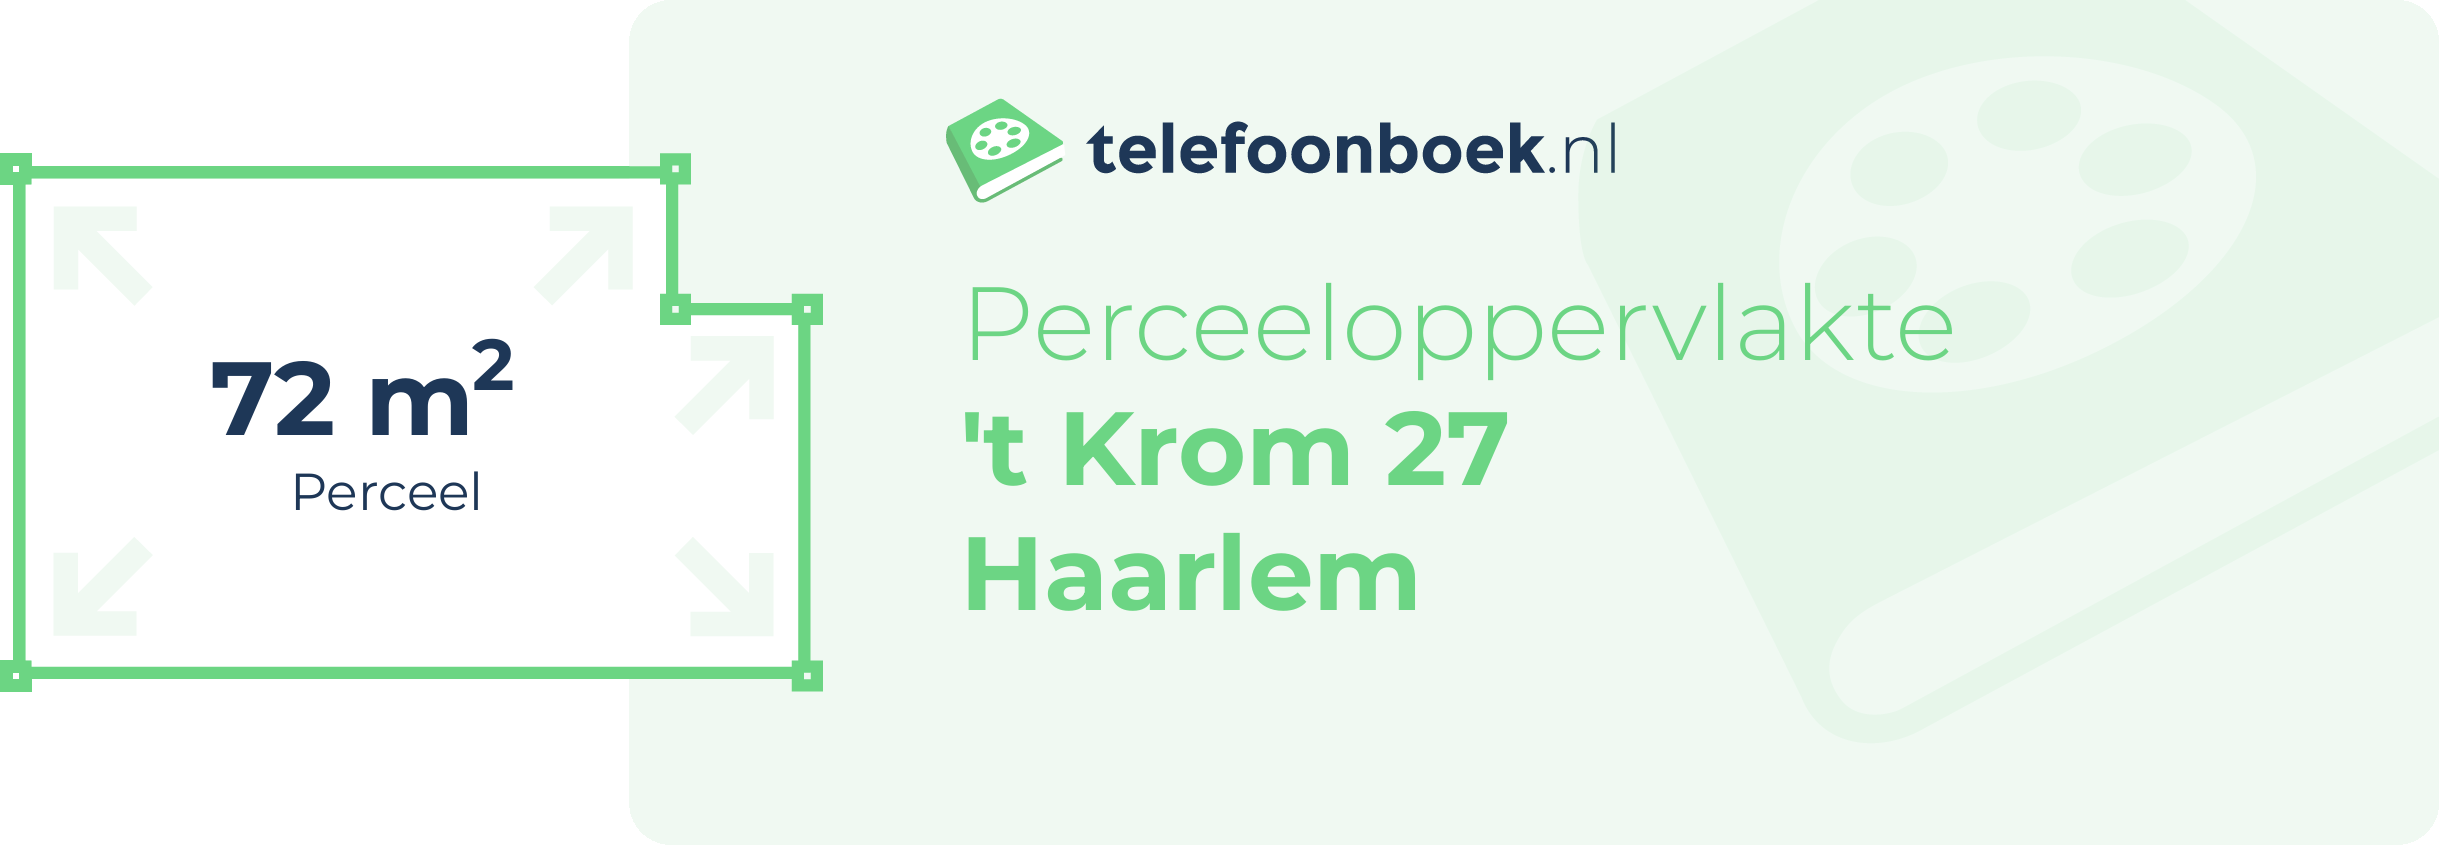 Perceeloppervlakte 't Krom 27 Haarlem